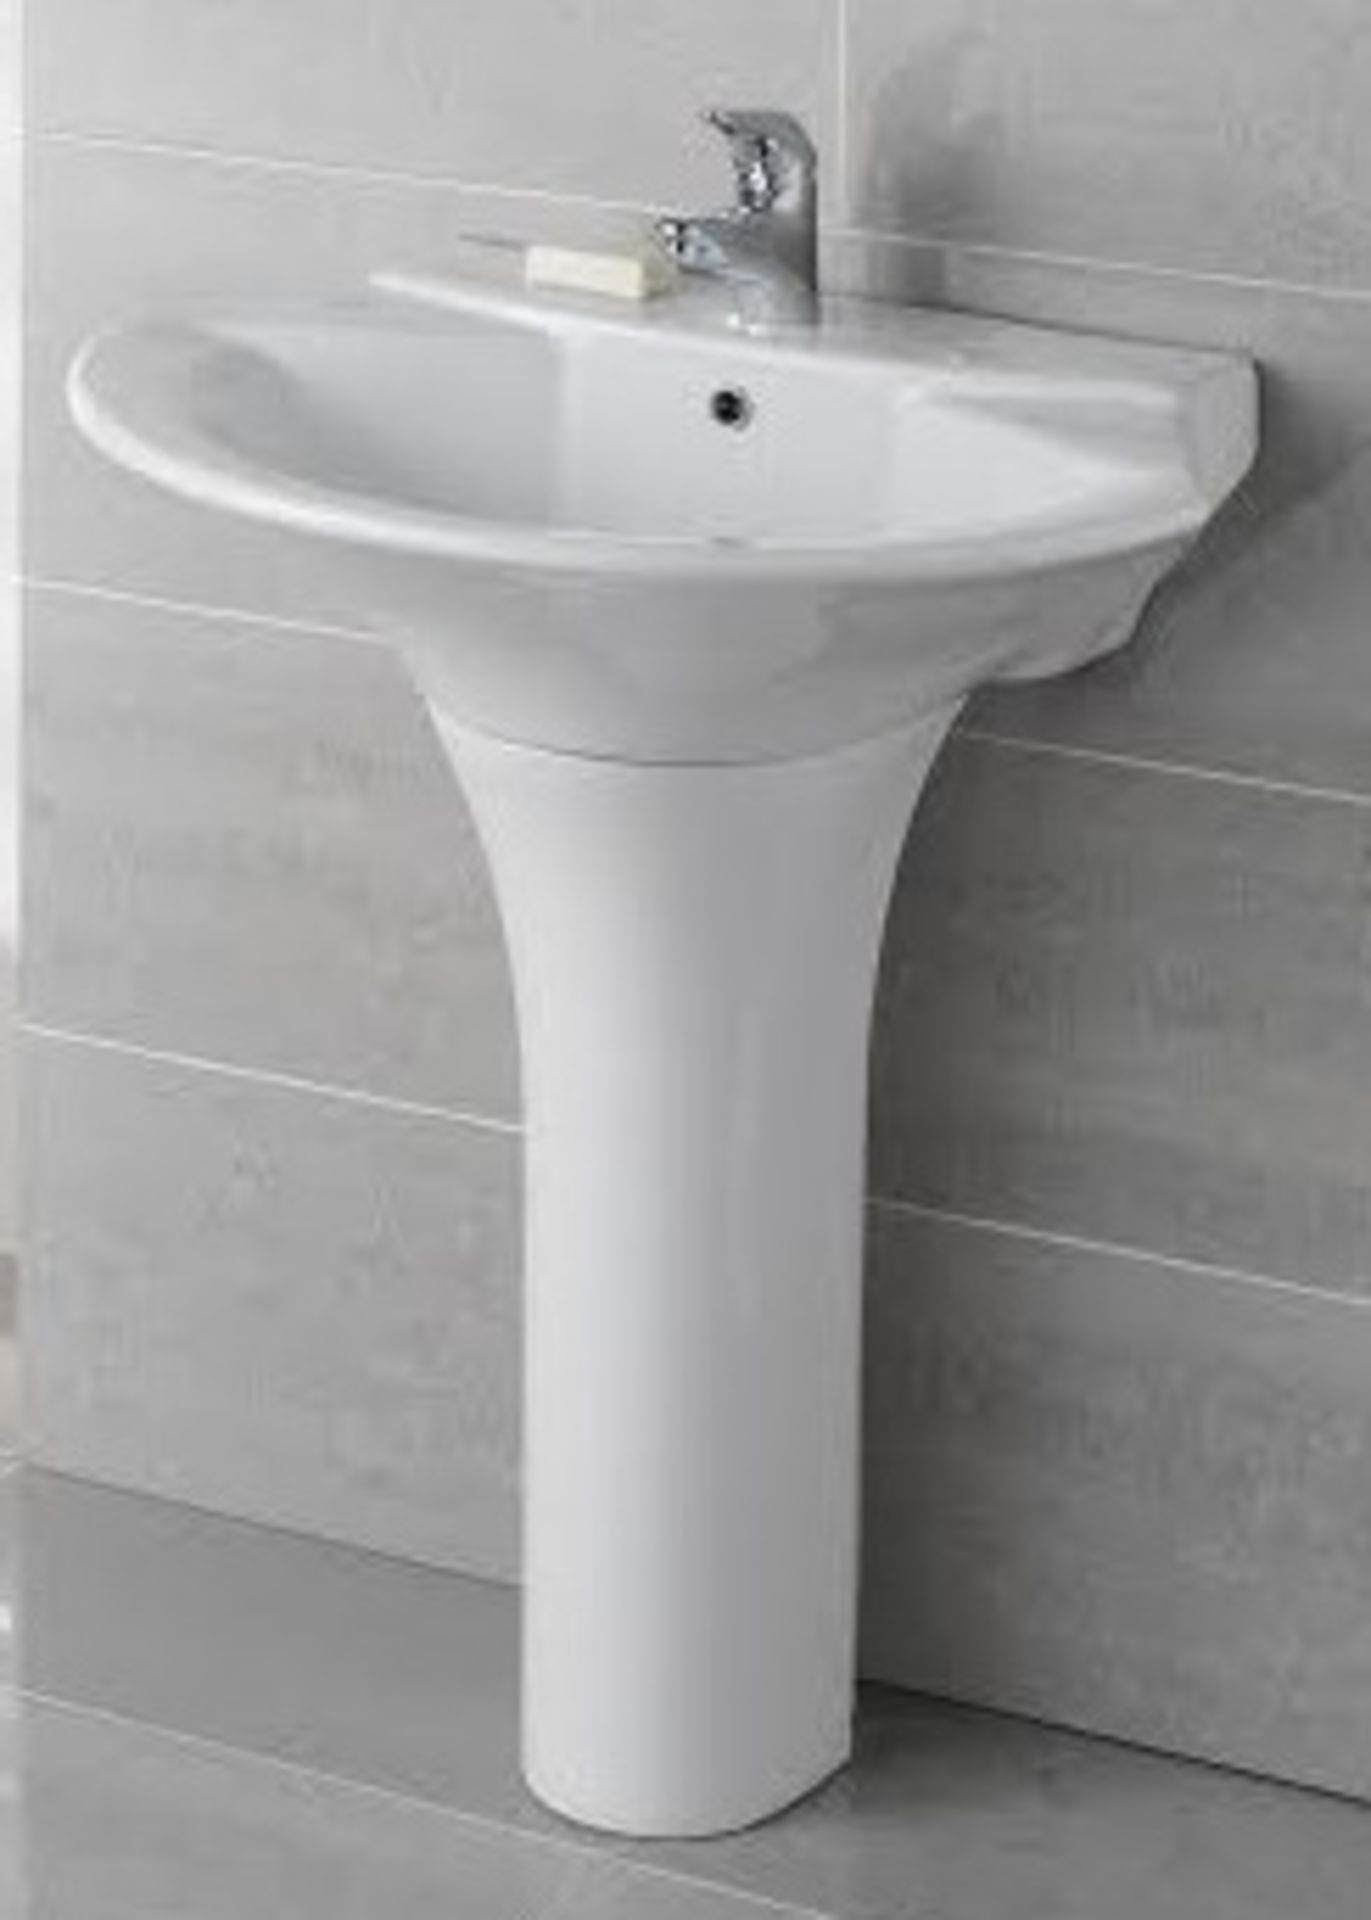 10 x Vogue Bathrooms COSMOS Single Tap Hole SINK BASINS With Pedestals - 600mm Width - Ref A - Brand